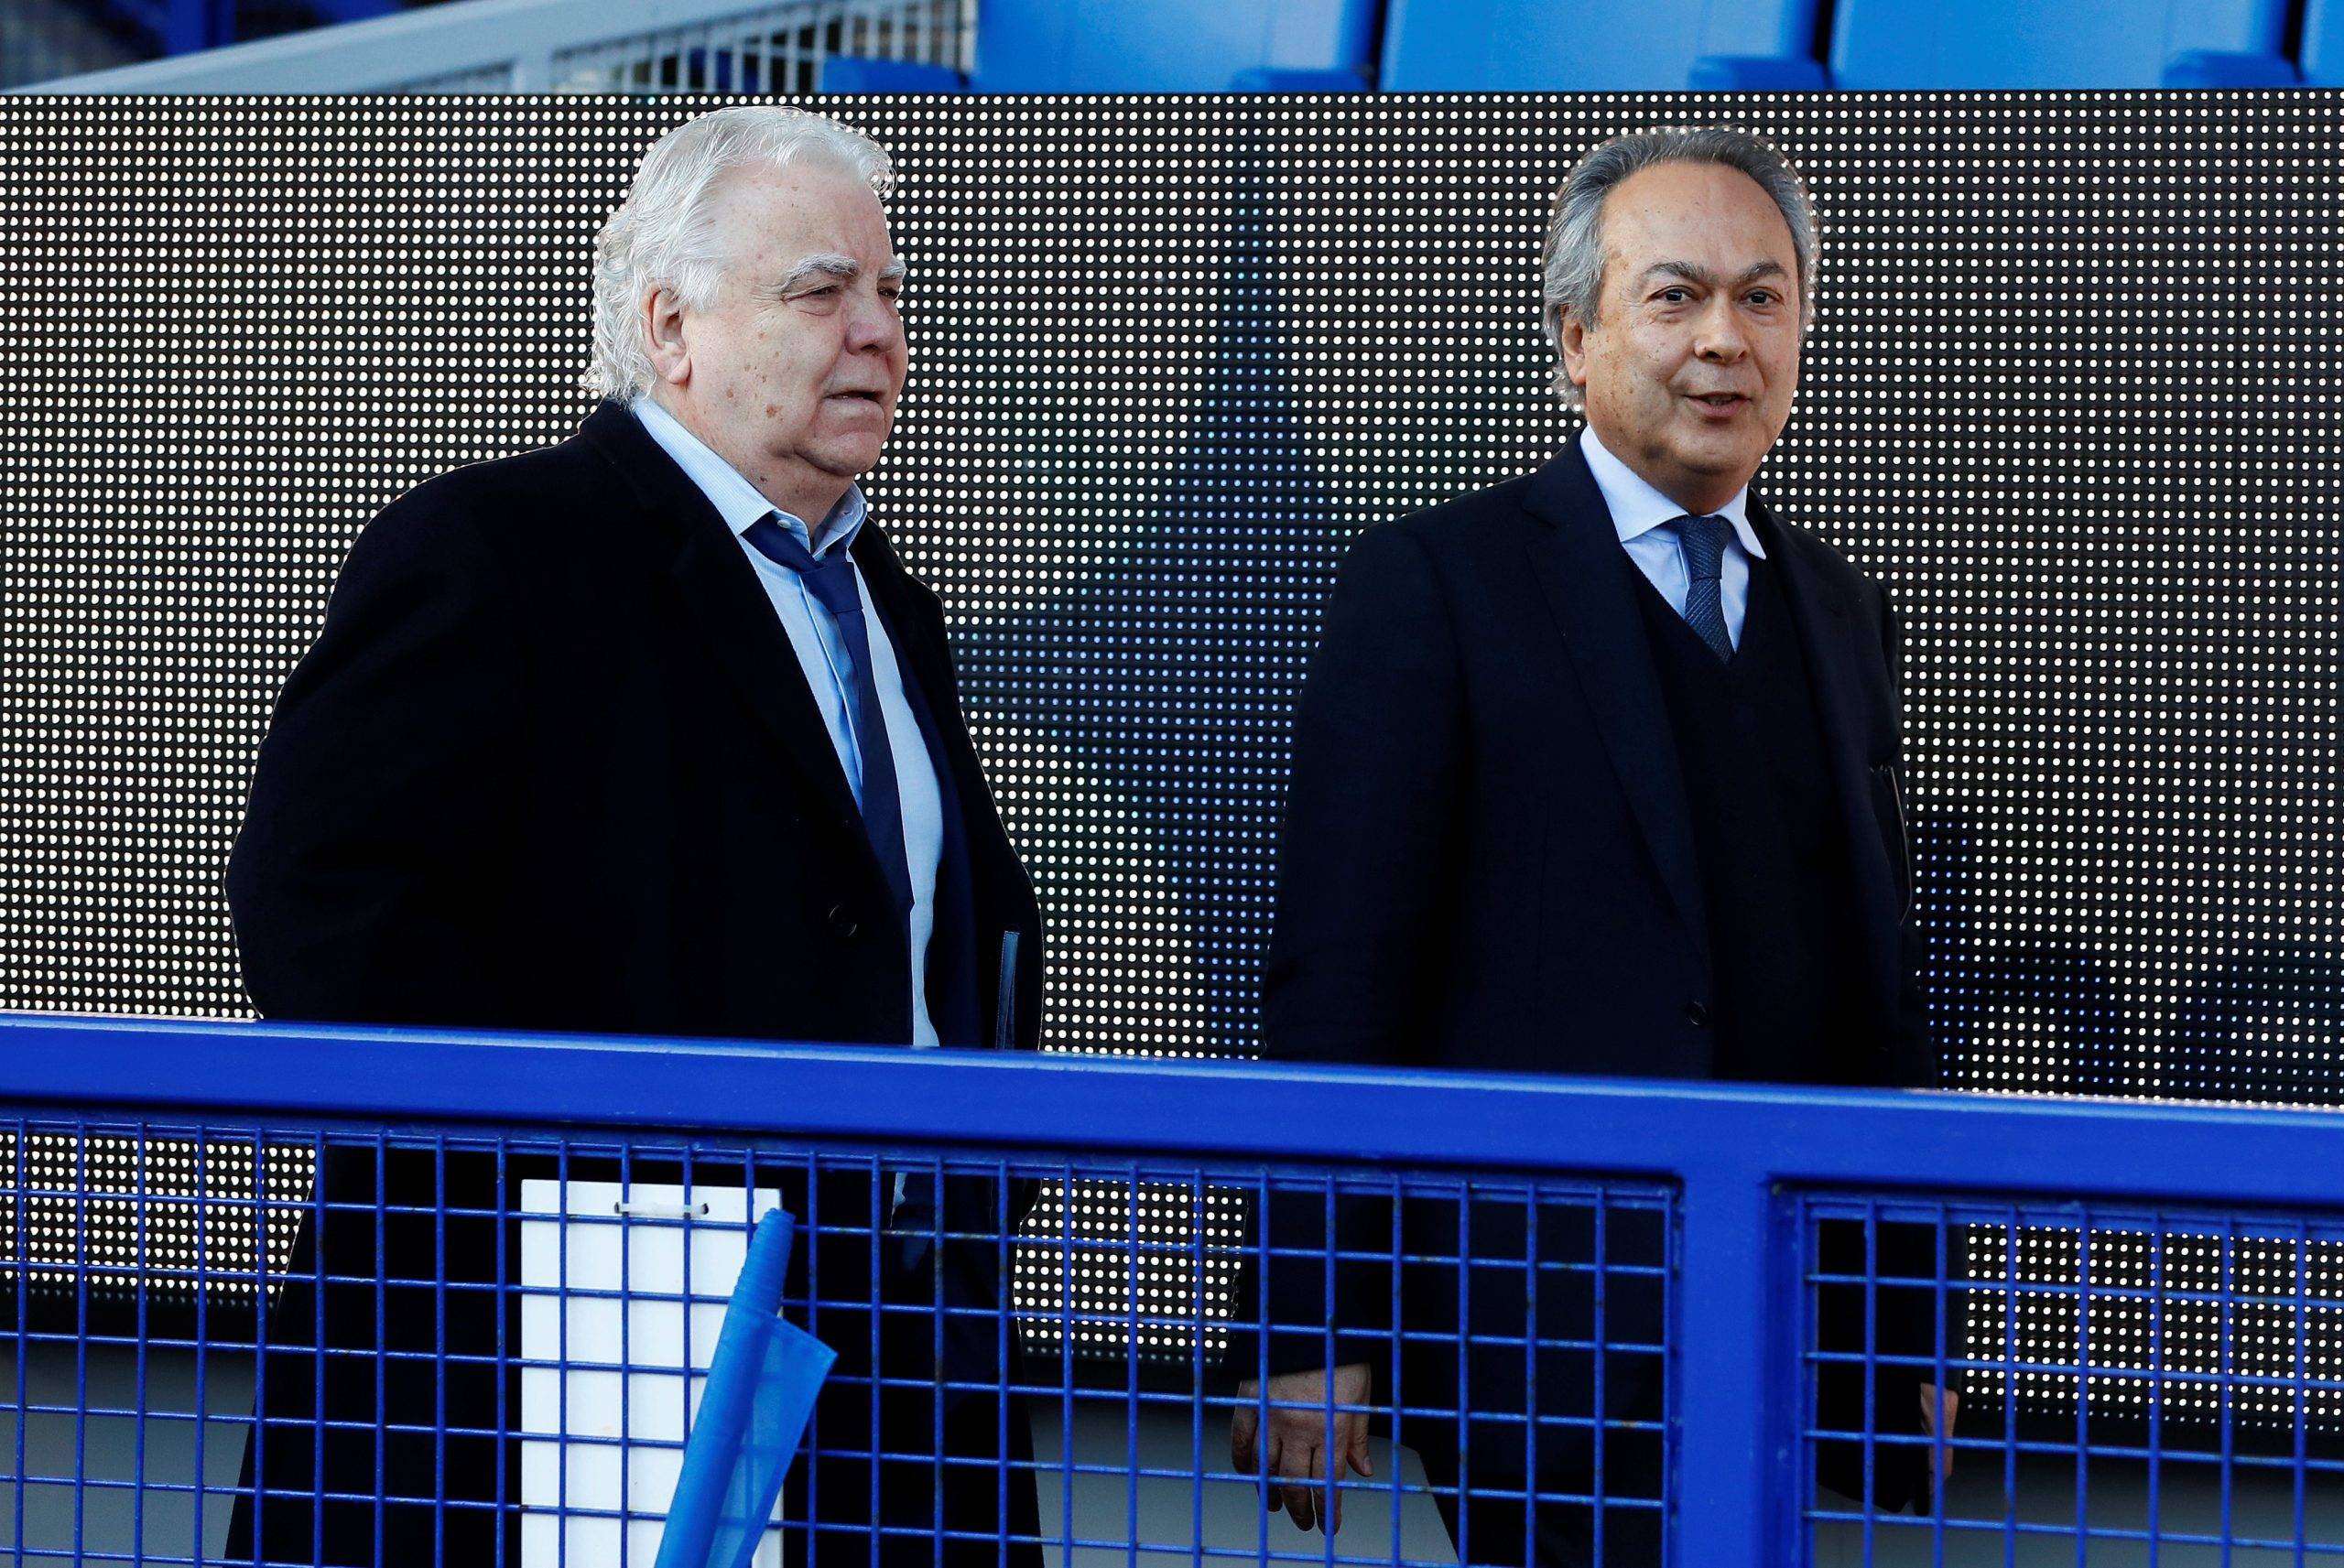 Everton chairman Bill Kenwright and owner Farhad Moshiri arrive before the match